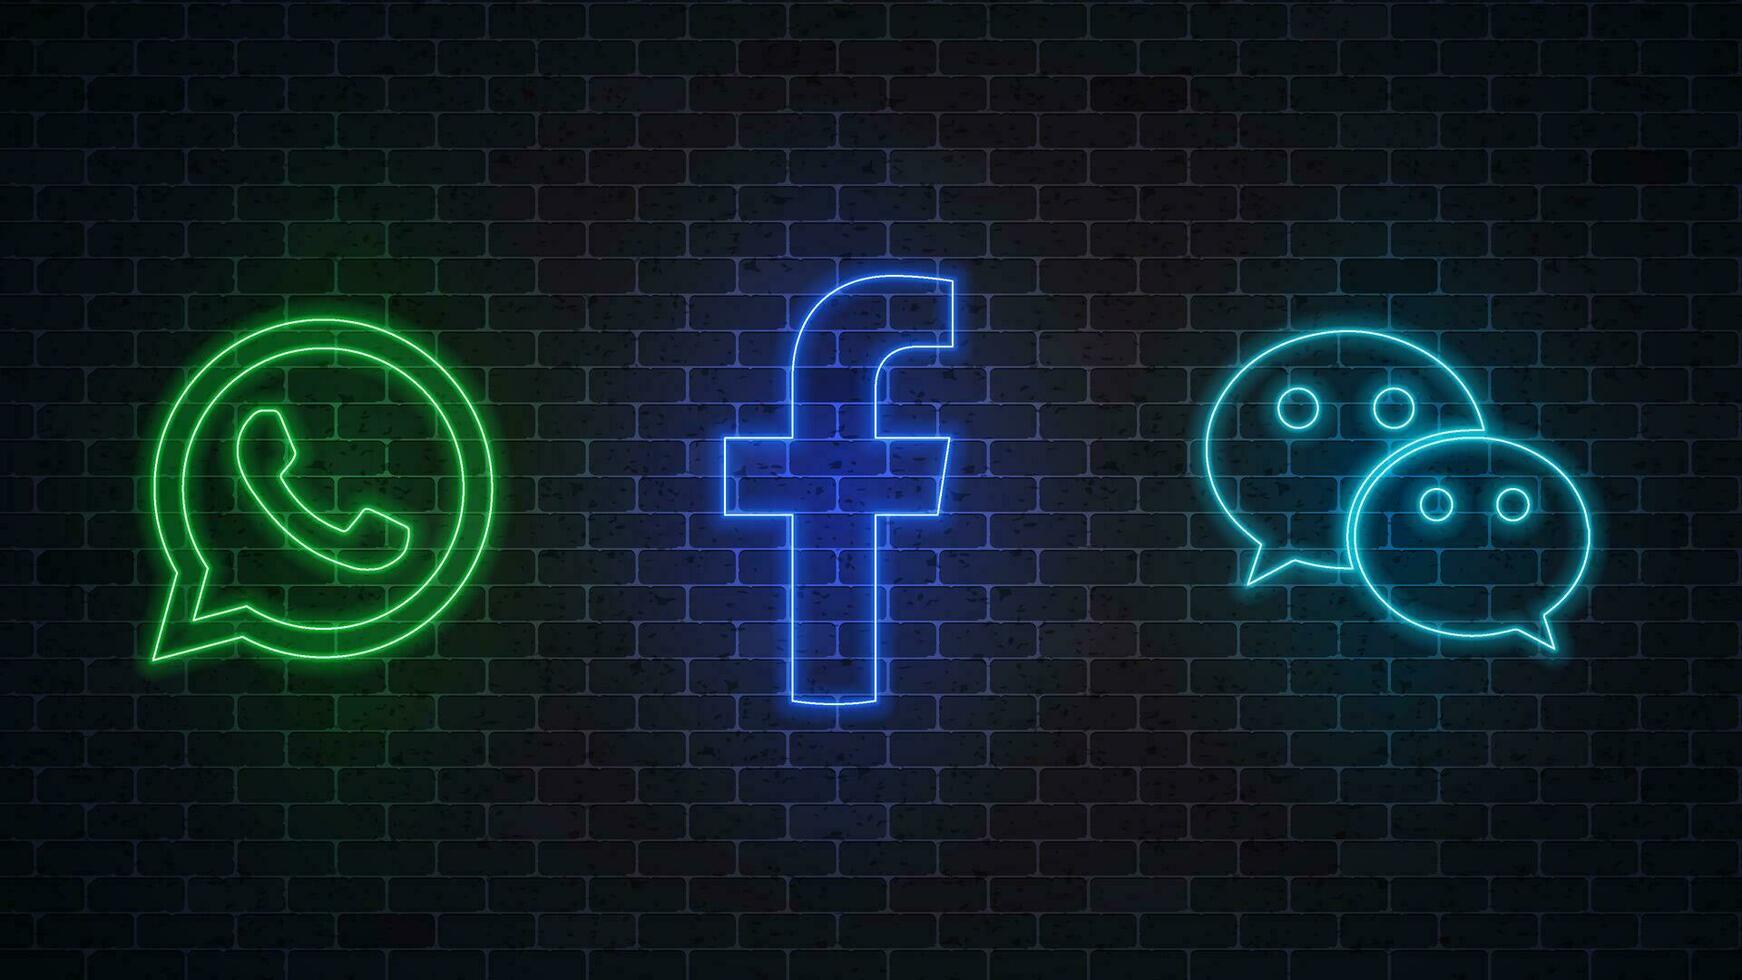 Facebook, whatsapp glowing neon sign. Vector illustration